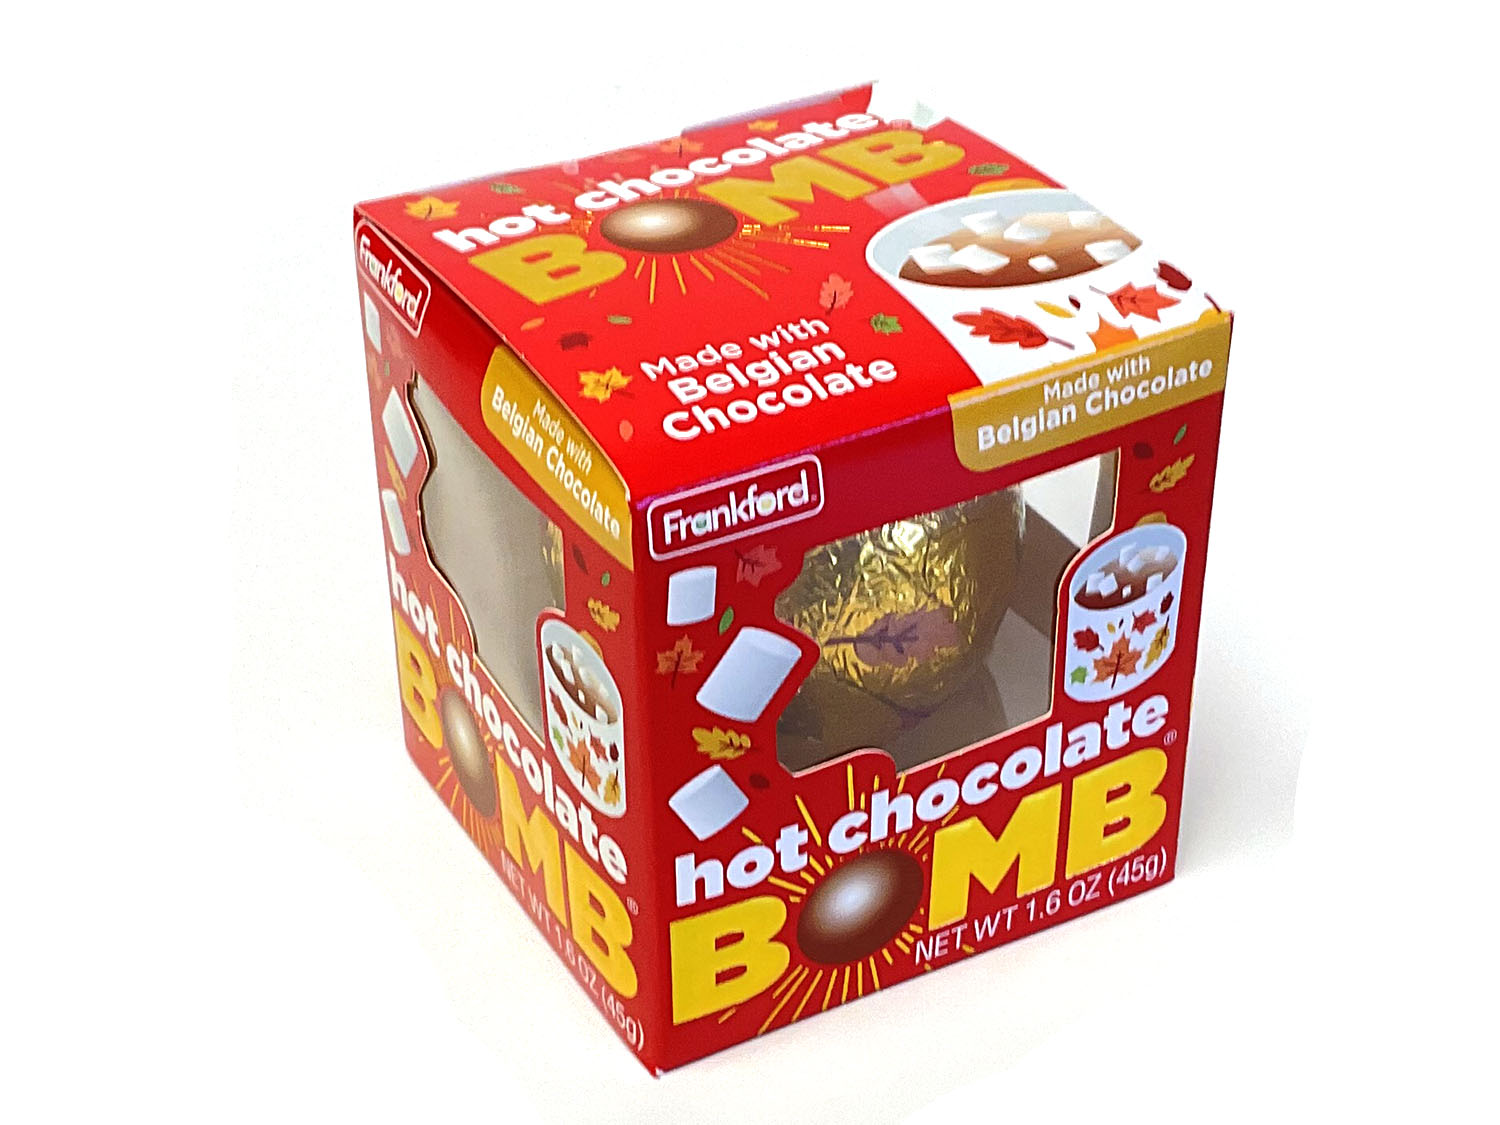 Hot Chocolate Bomb - 1.6 oz